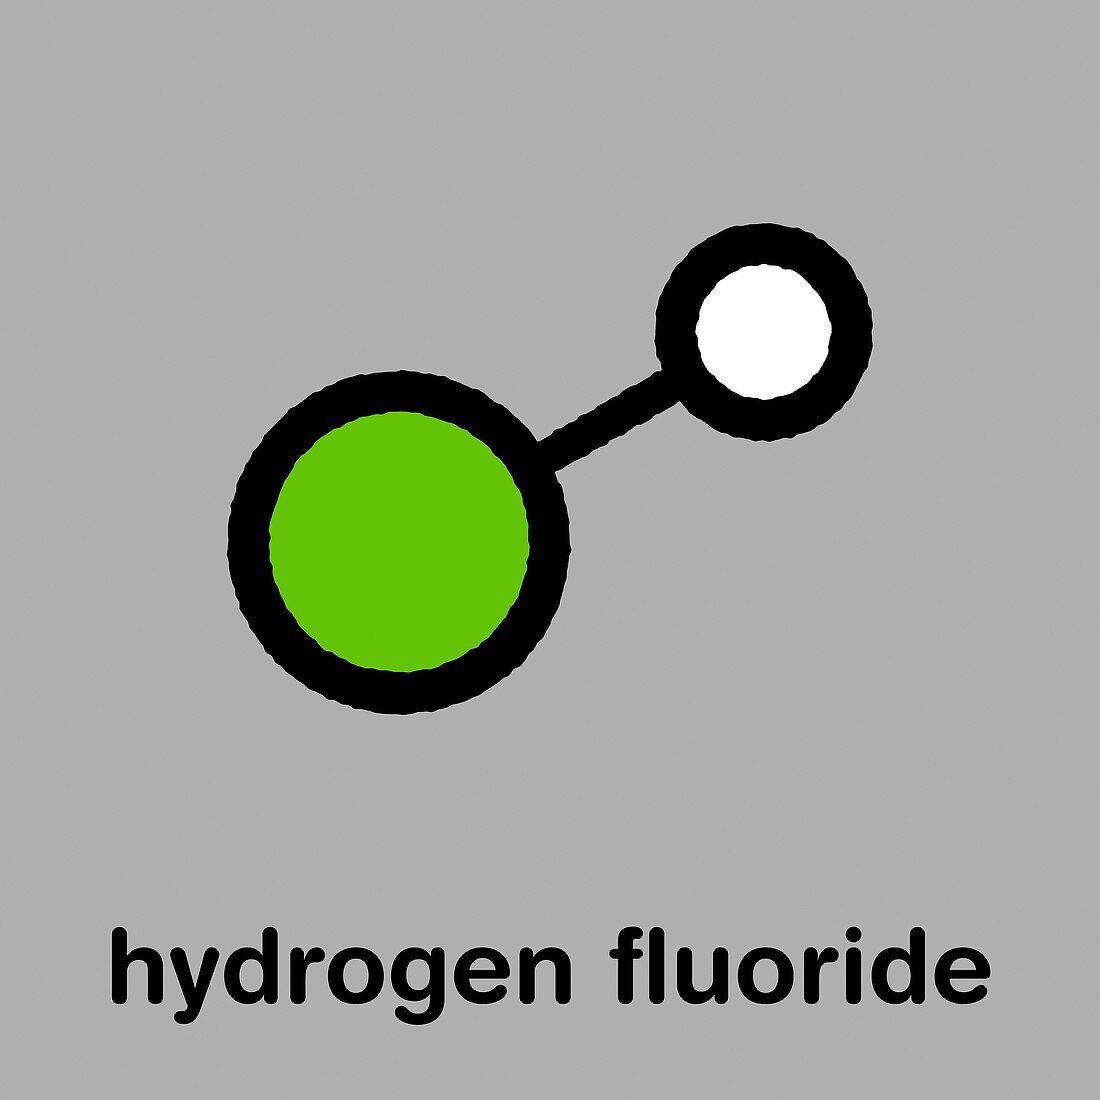 Hydrogen fluoride molecule, illustration